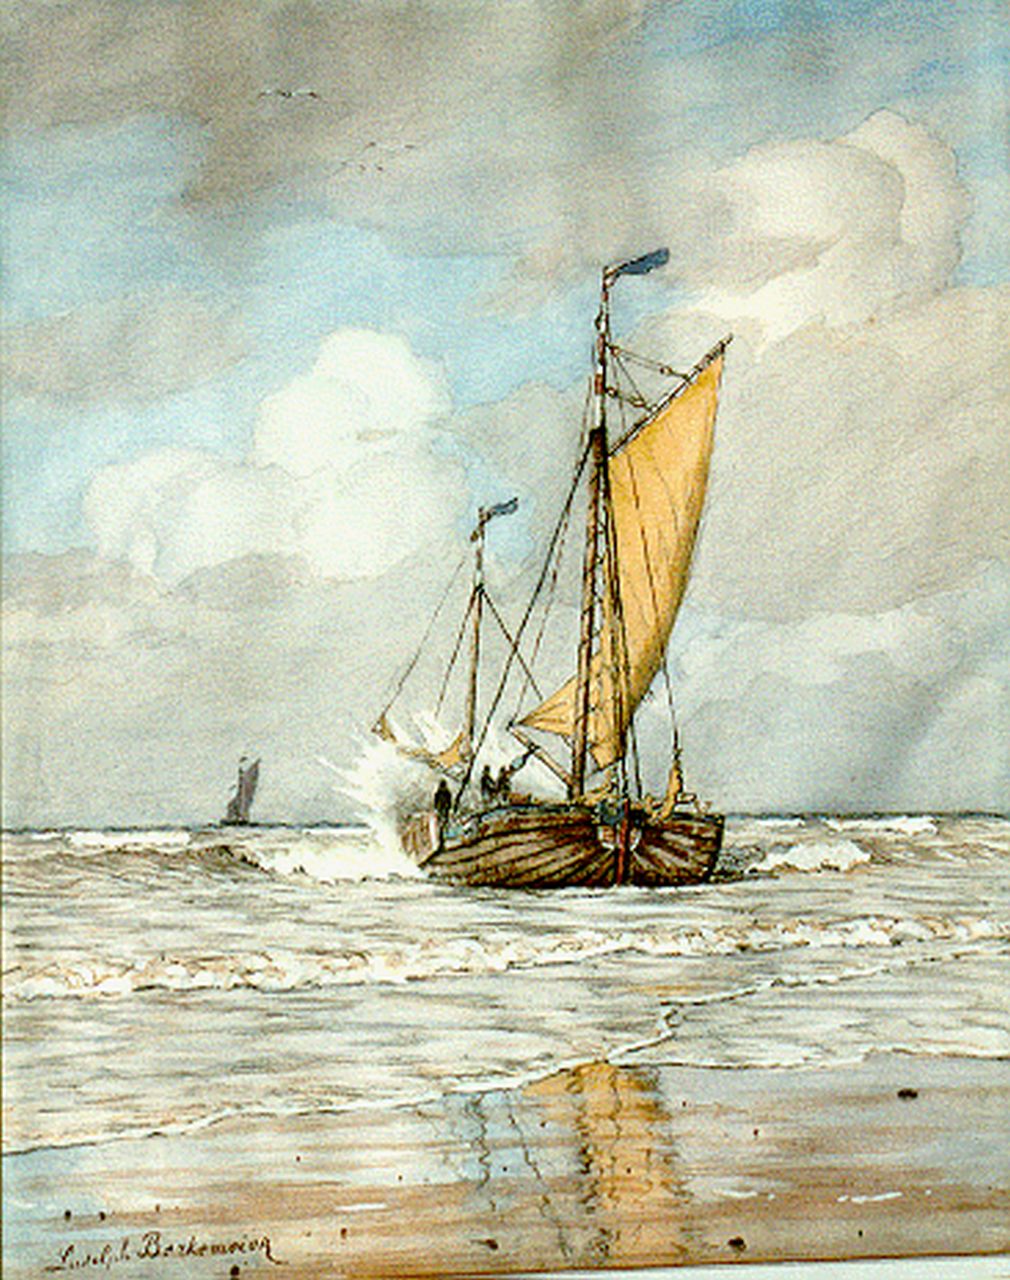 Berkemeier L.G.J.  | 'Ludolph' Georg Julius Berkemeier, A 'bomschuit' offshore, watercolour on paper 55.0 x 43.0 cm, signed l.l.